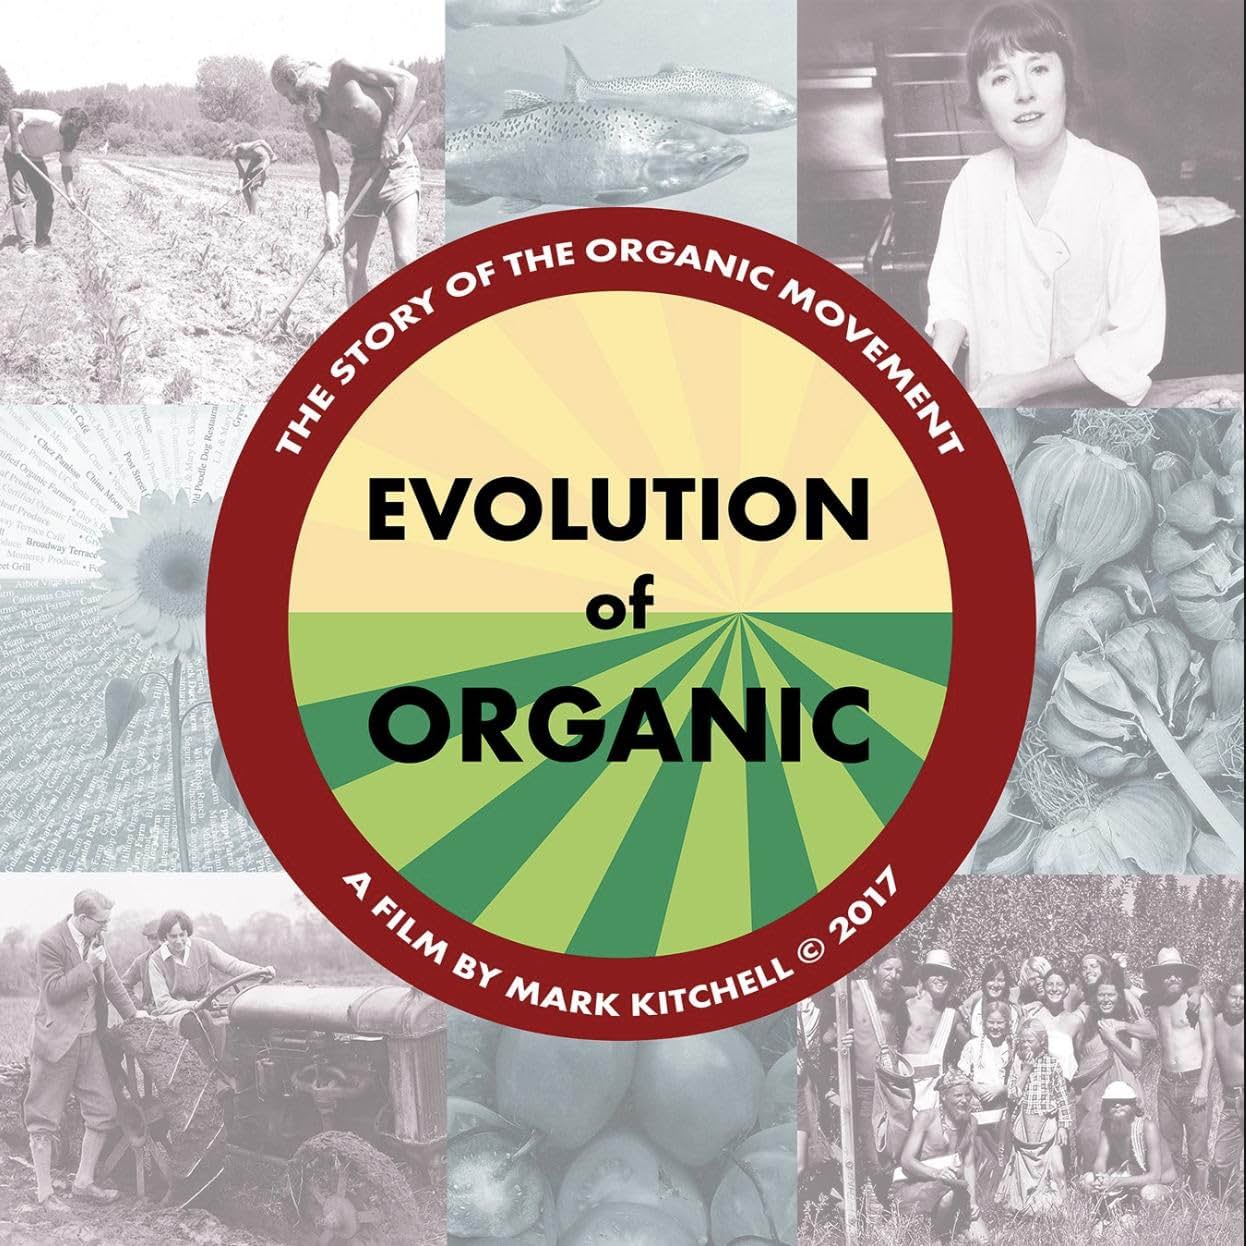     Evolution of Organic